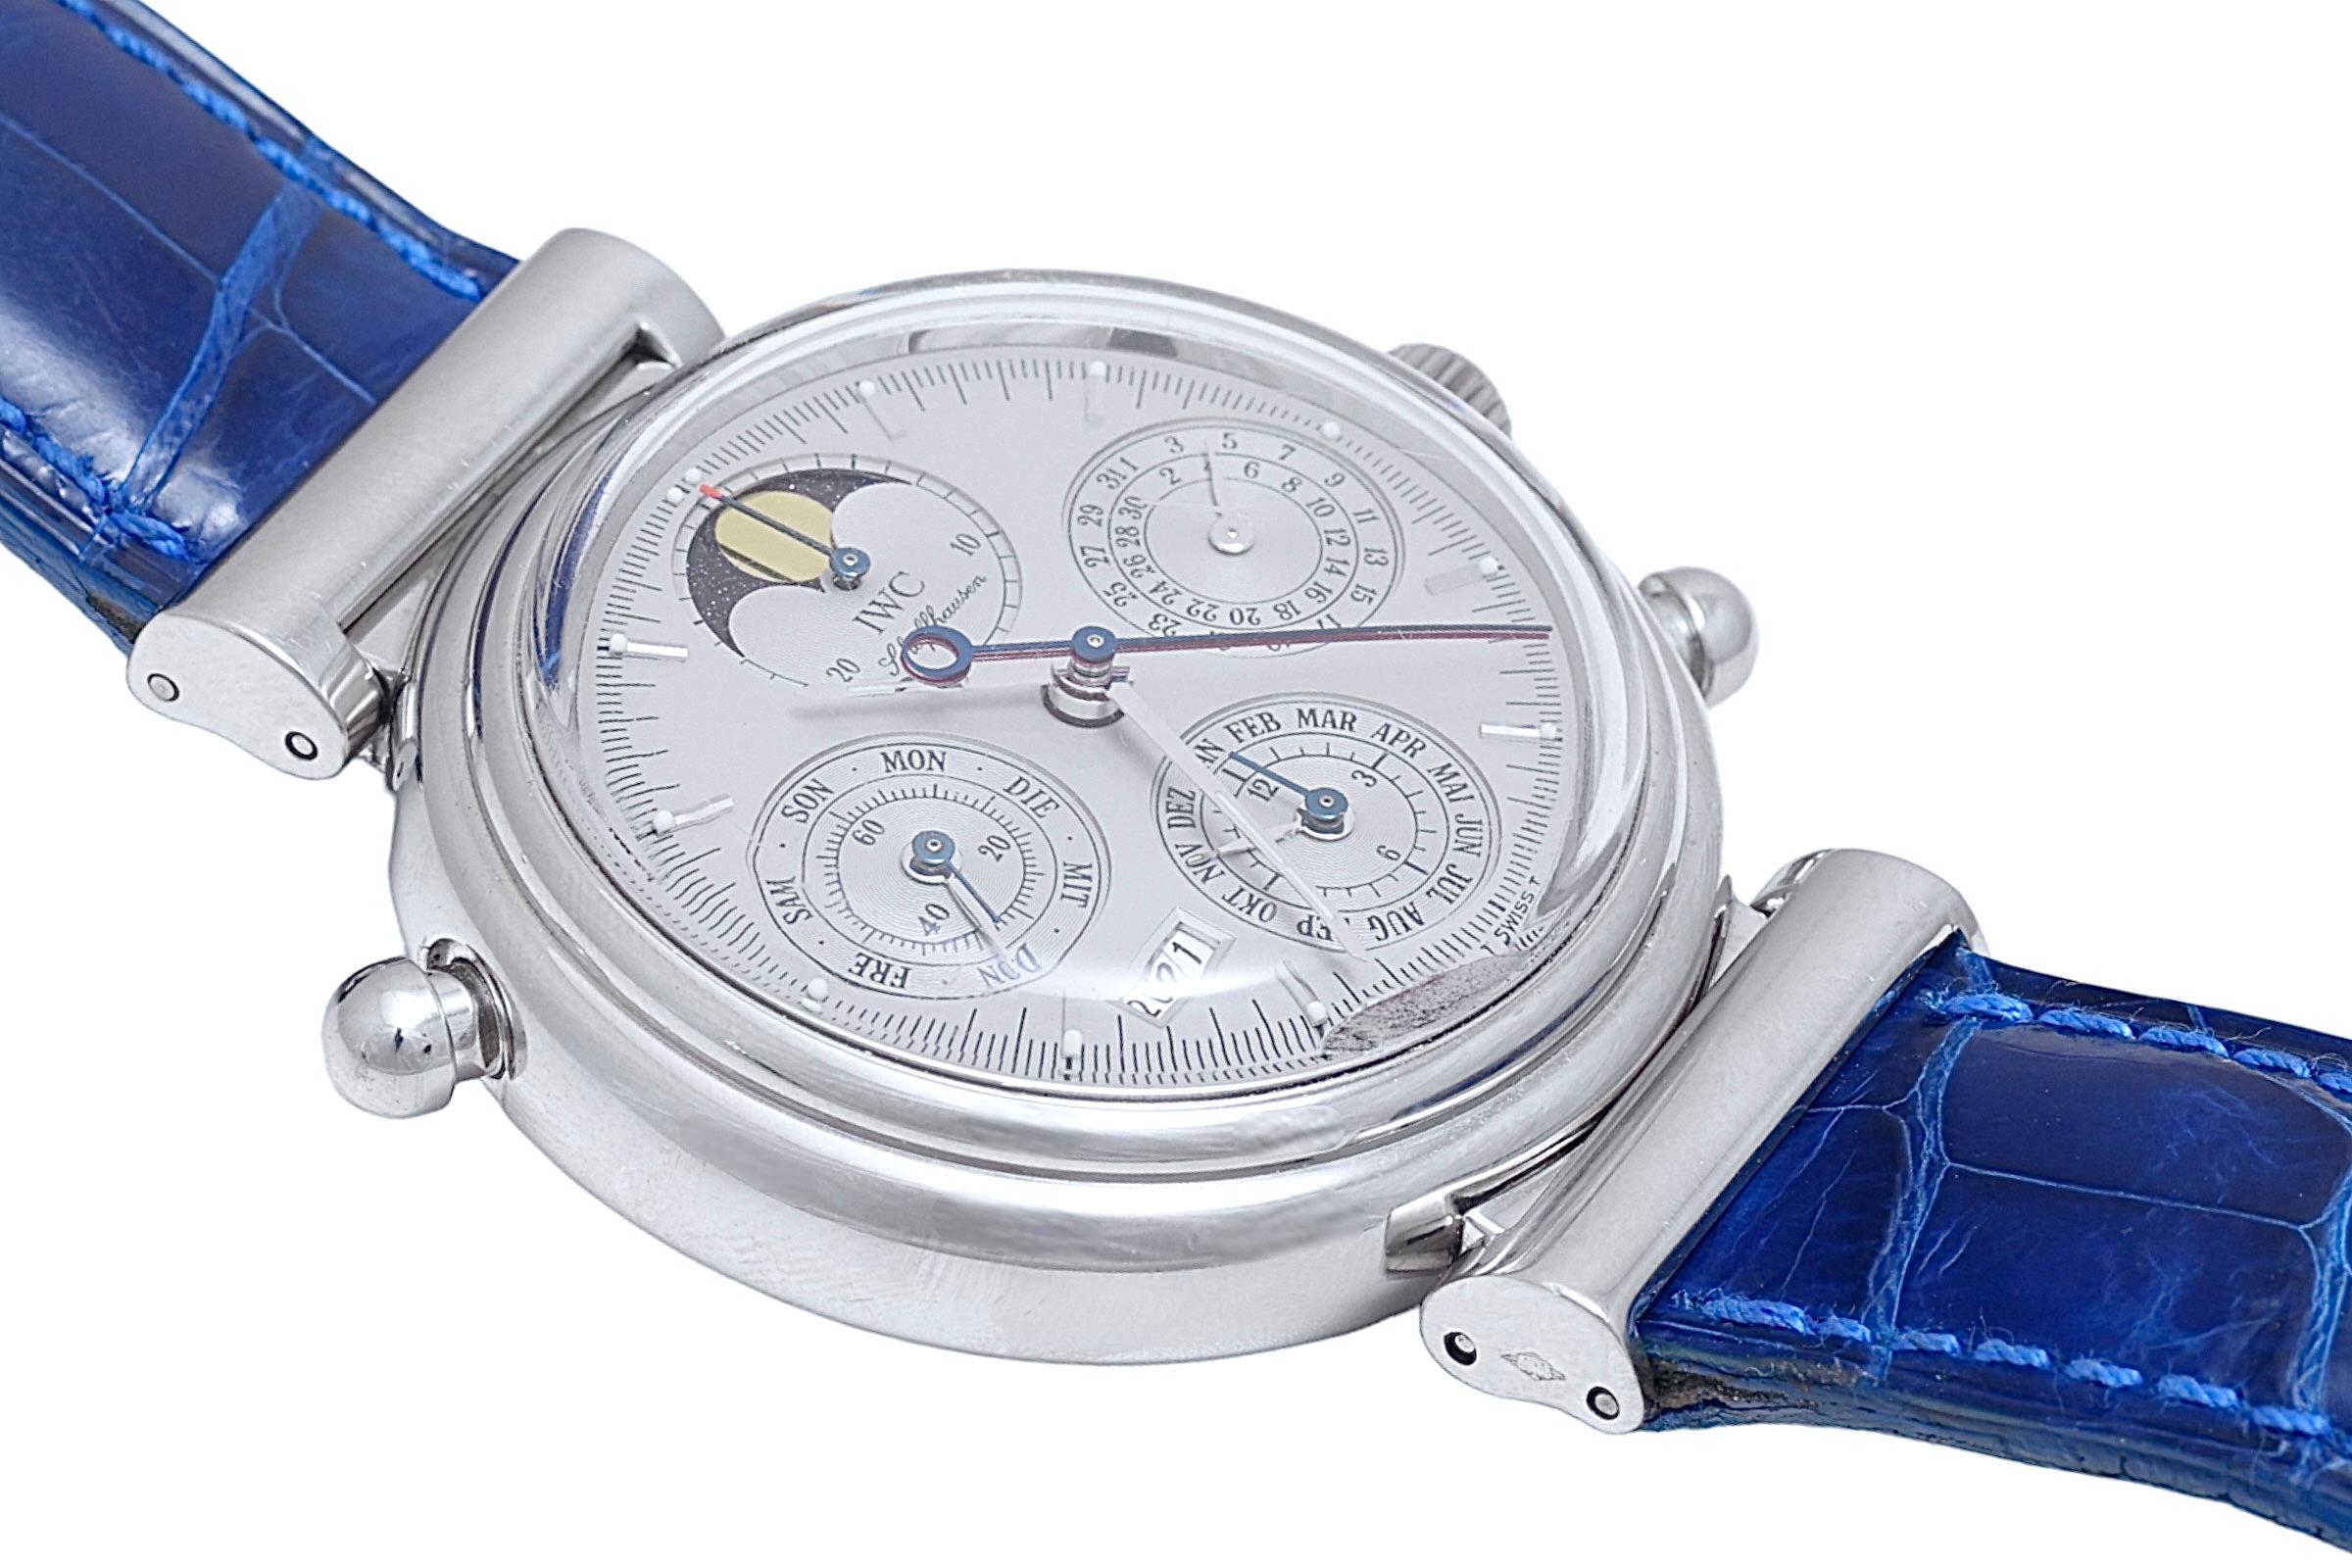 Platinum IWC Perpetual Calendar Split Second Chronograph Limited Wrist Watch3751 For Sale 3